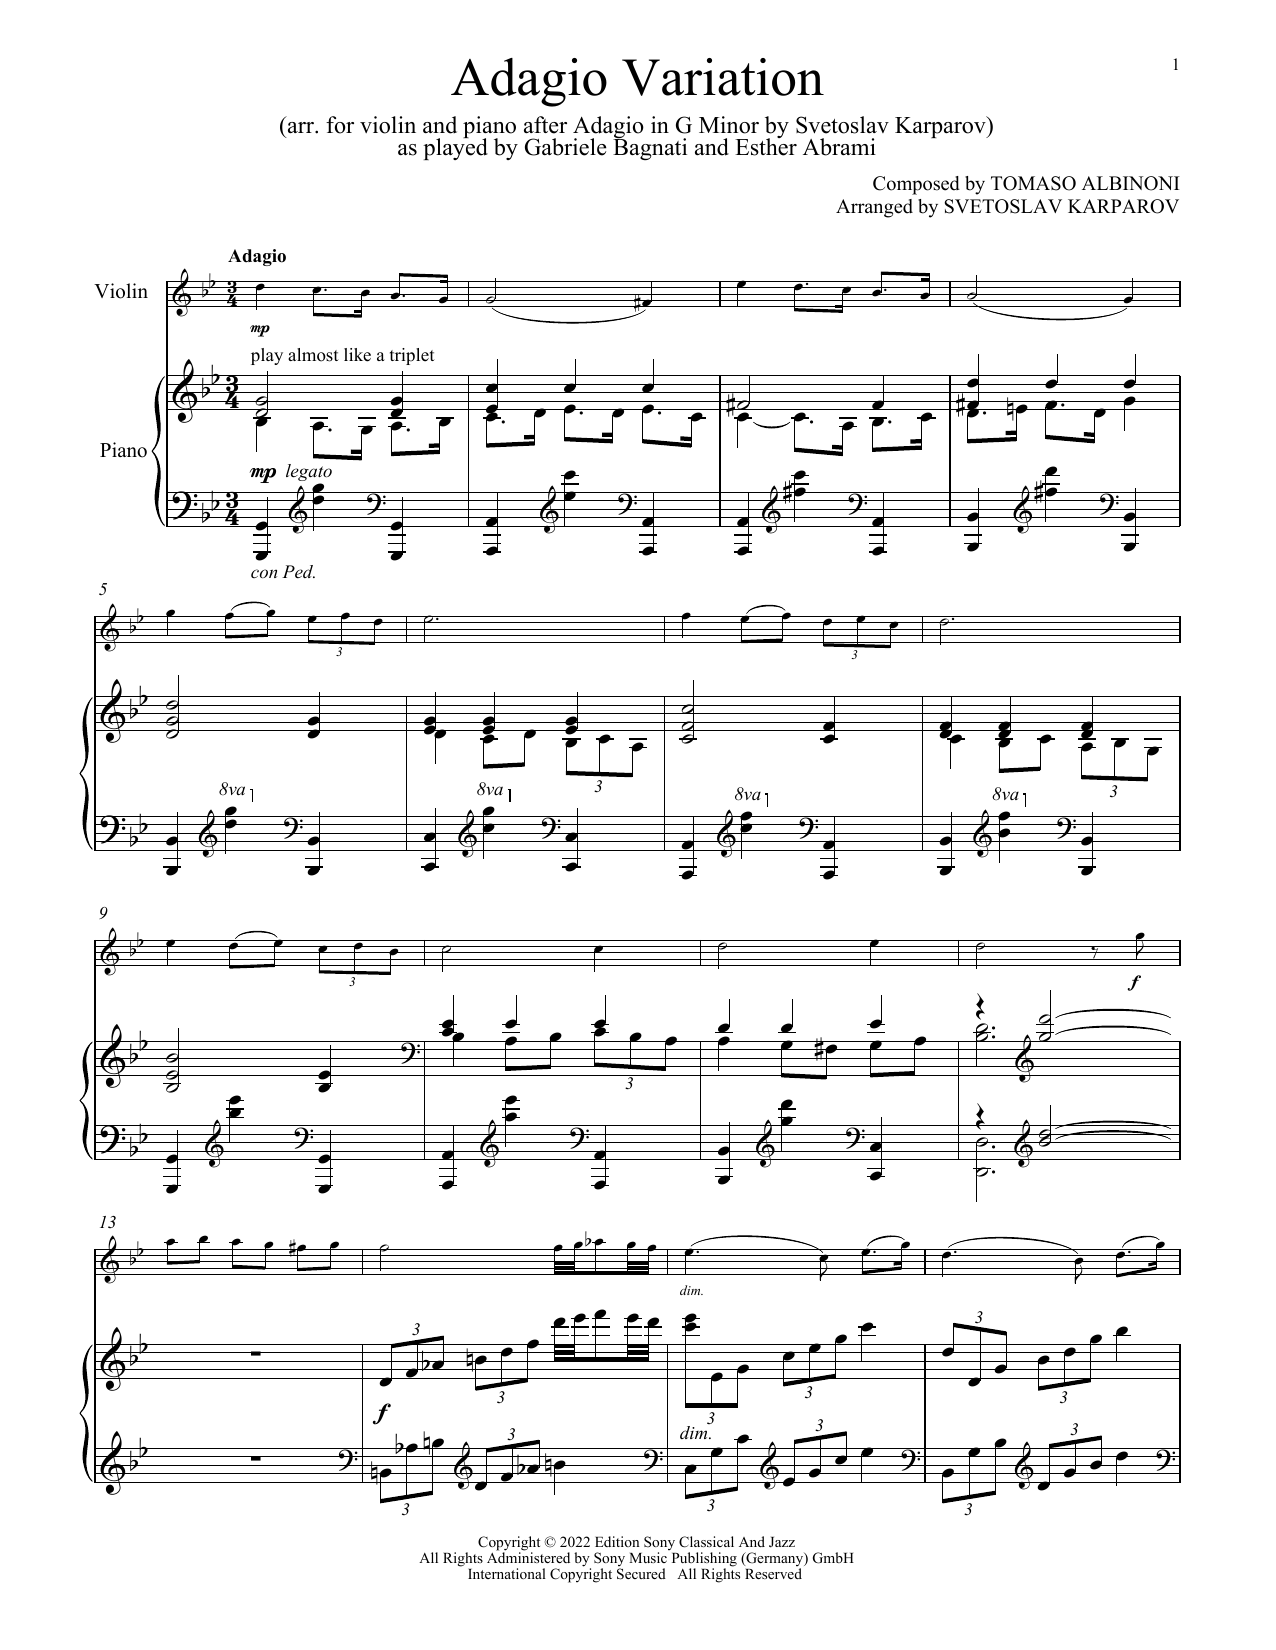 Gabriele Bagnati and Esther Abrami Adagio Variation (arr. Svetoslav Karparov) sheet music notes and chords arranged for Violin and Piano